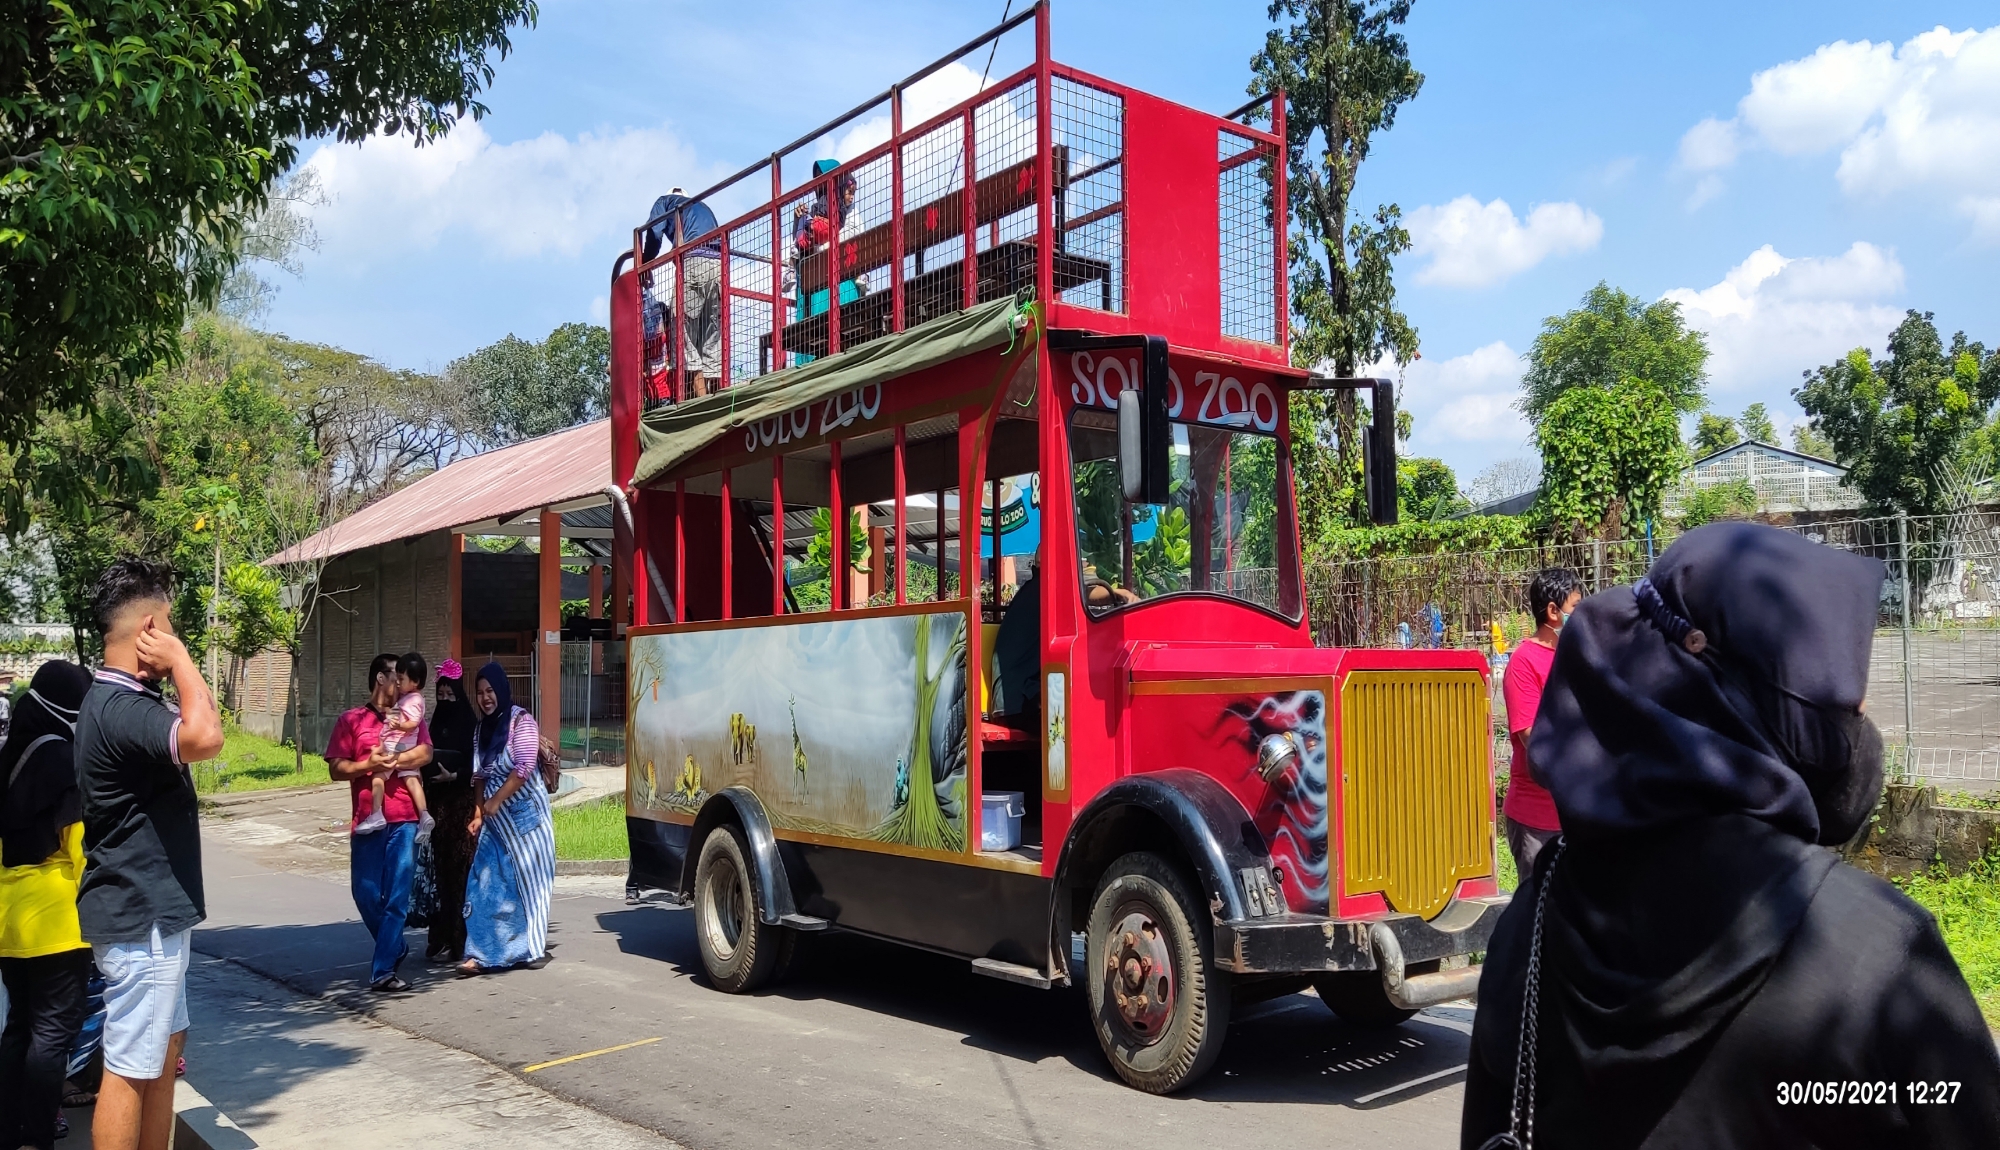 Bus Jurug Solo Zoo tengah melintas di area kebun binatang Jurug Solo Zoo.